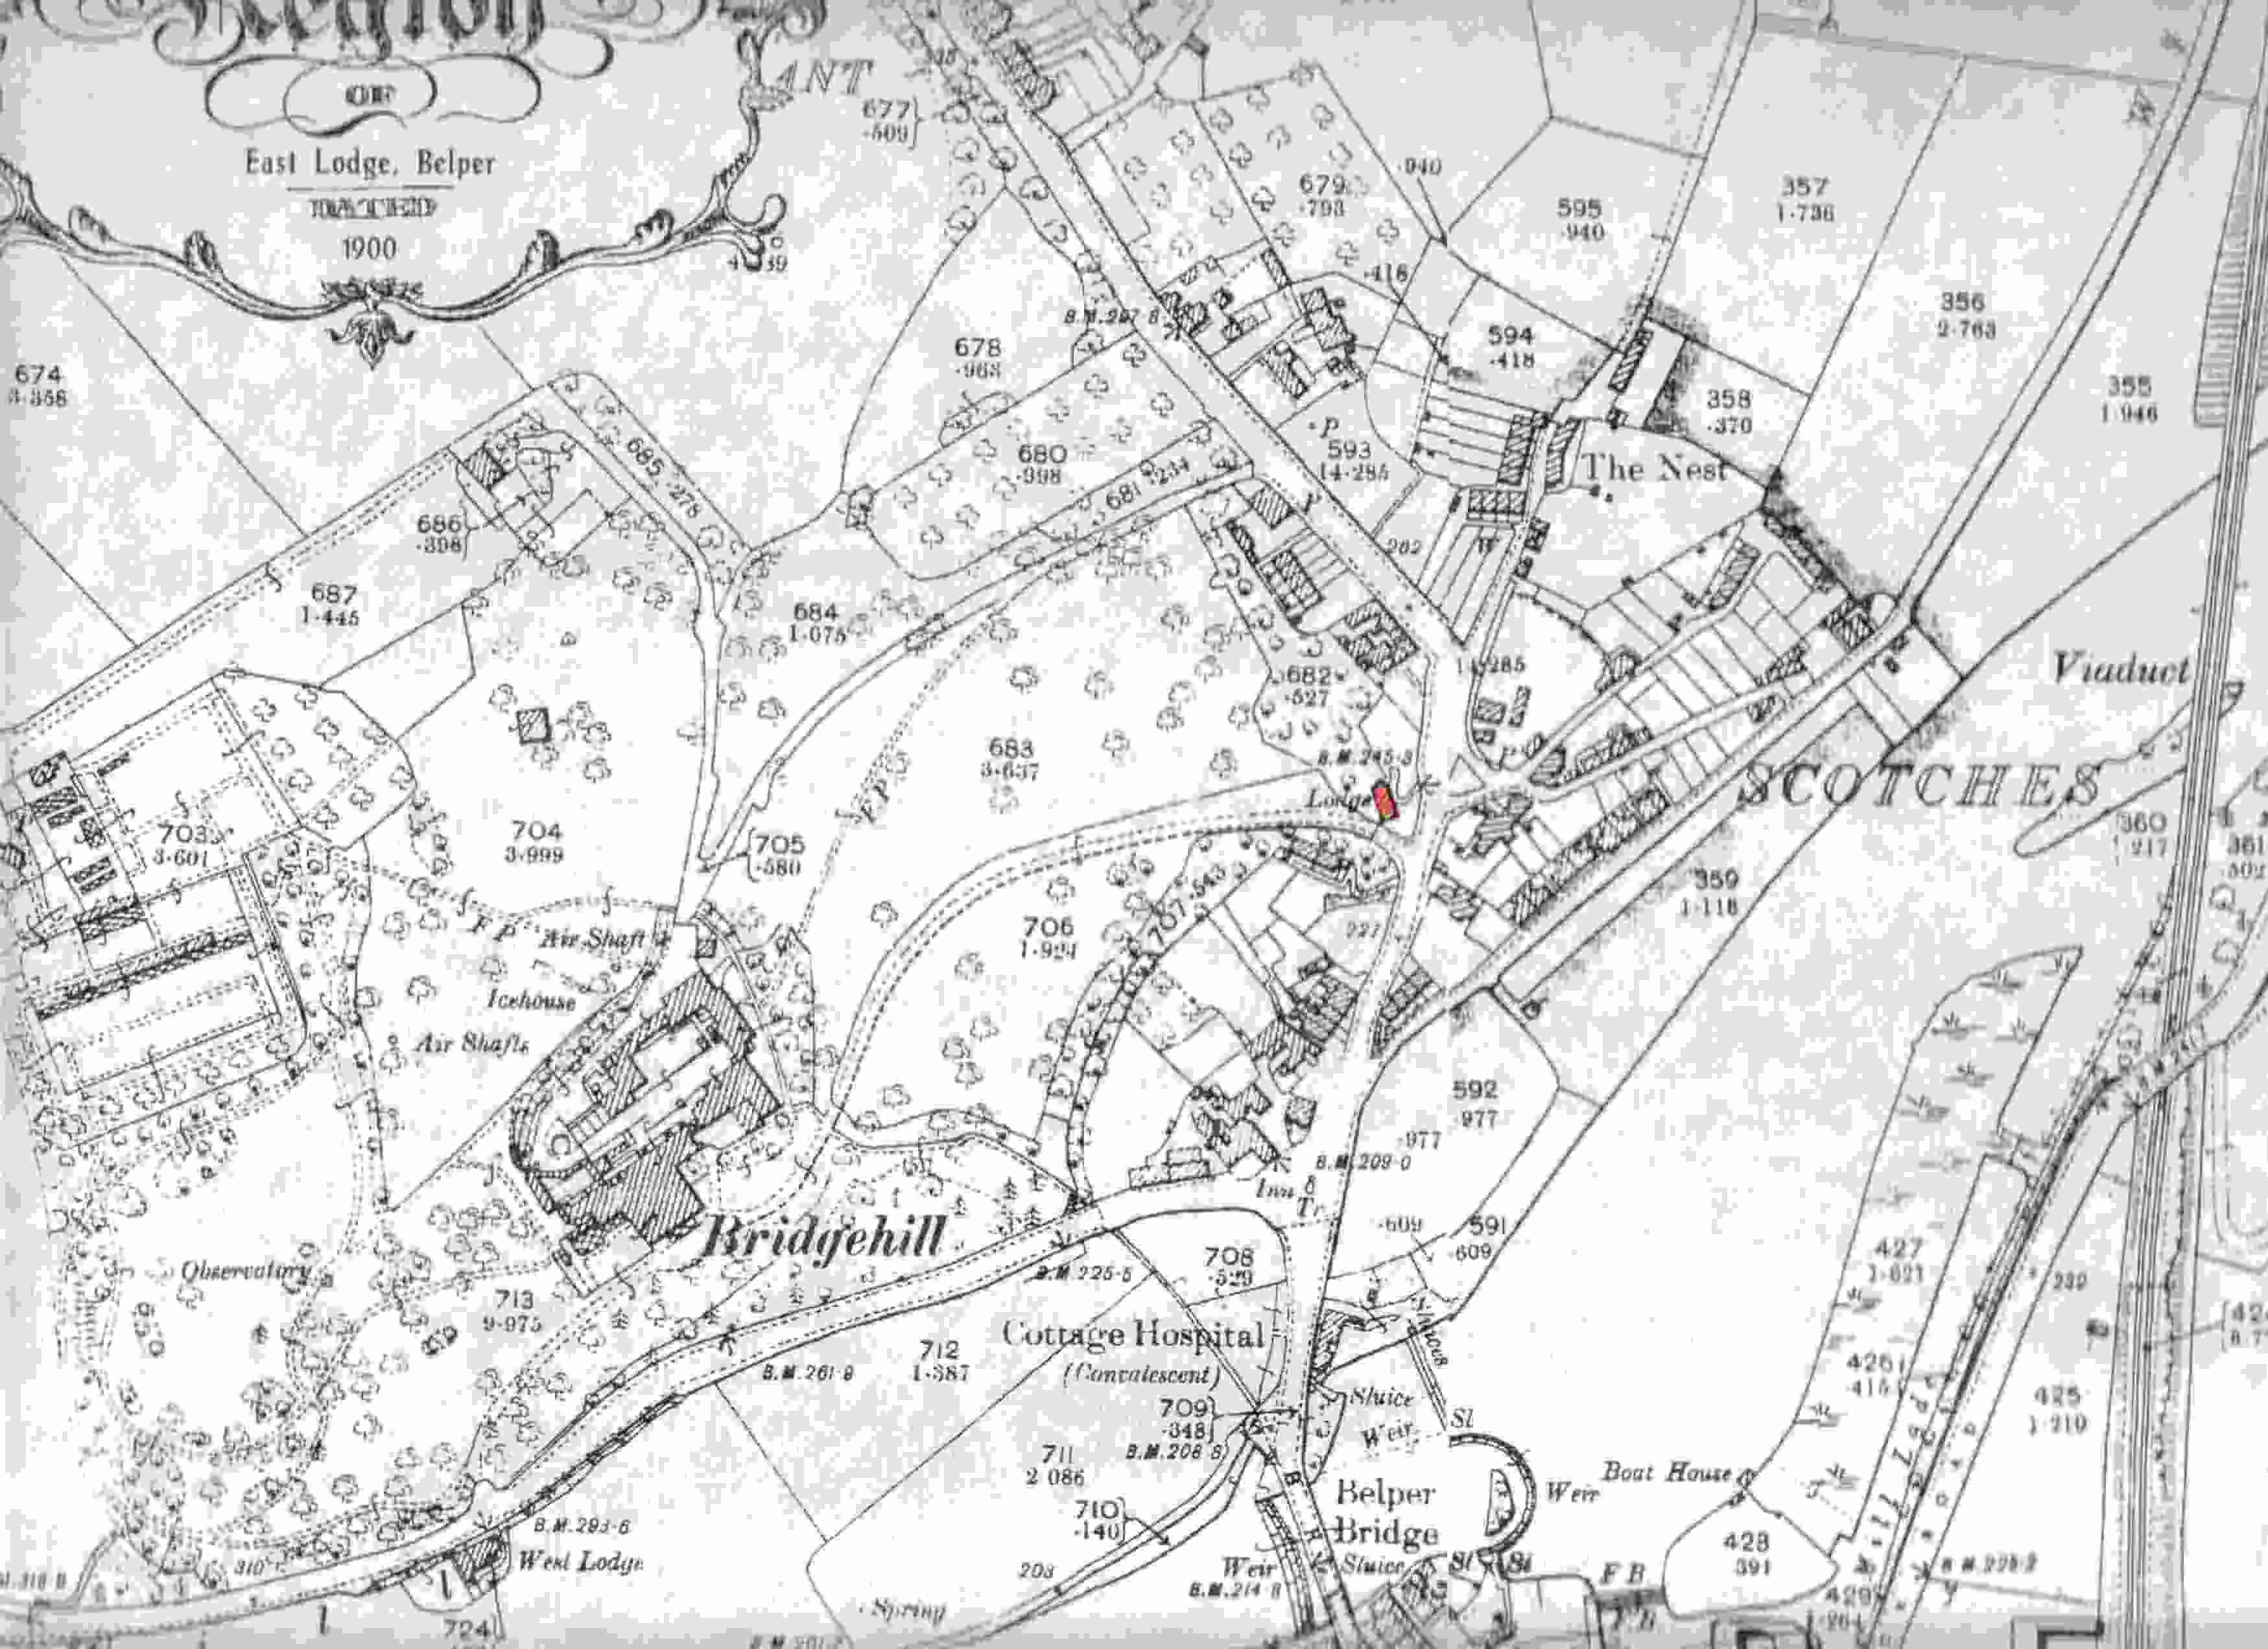 Map of Bridgehill and East Lodge, Belper, Derbyshire, UK